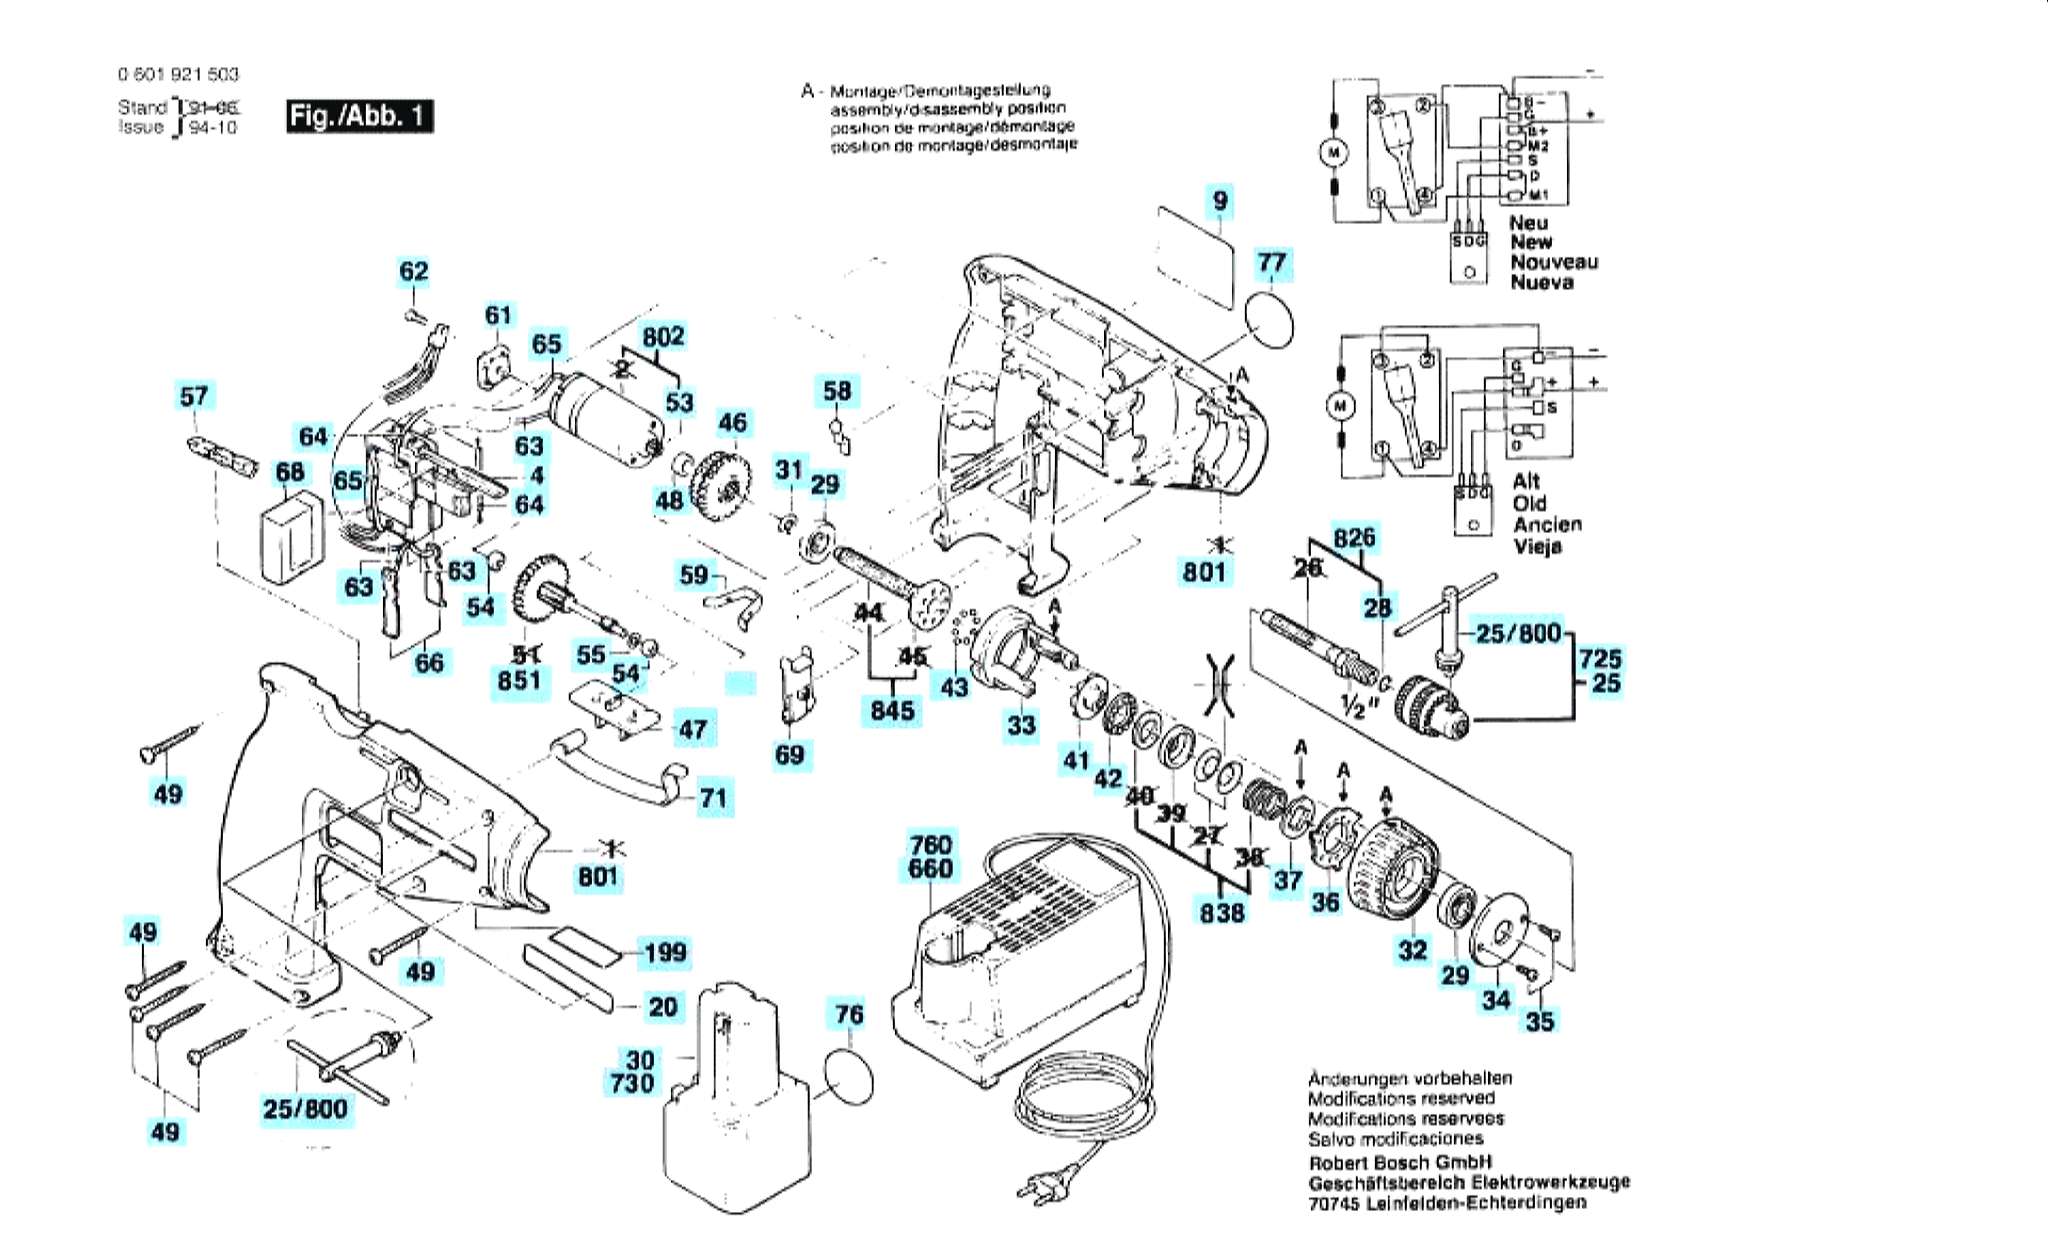 Запчасти, схема и деталировка Bosch GSR 12 VES (ТИП 0601921503)